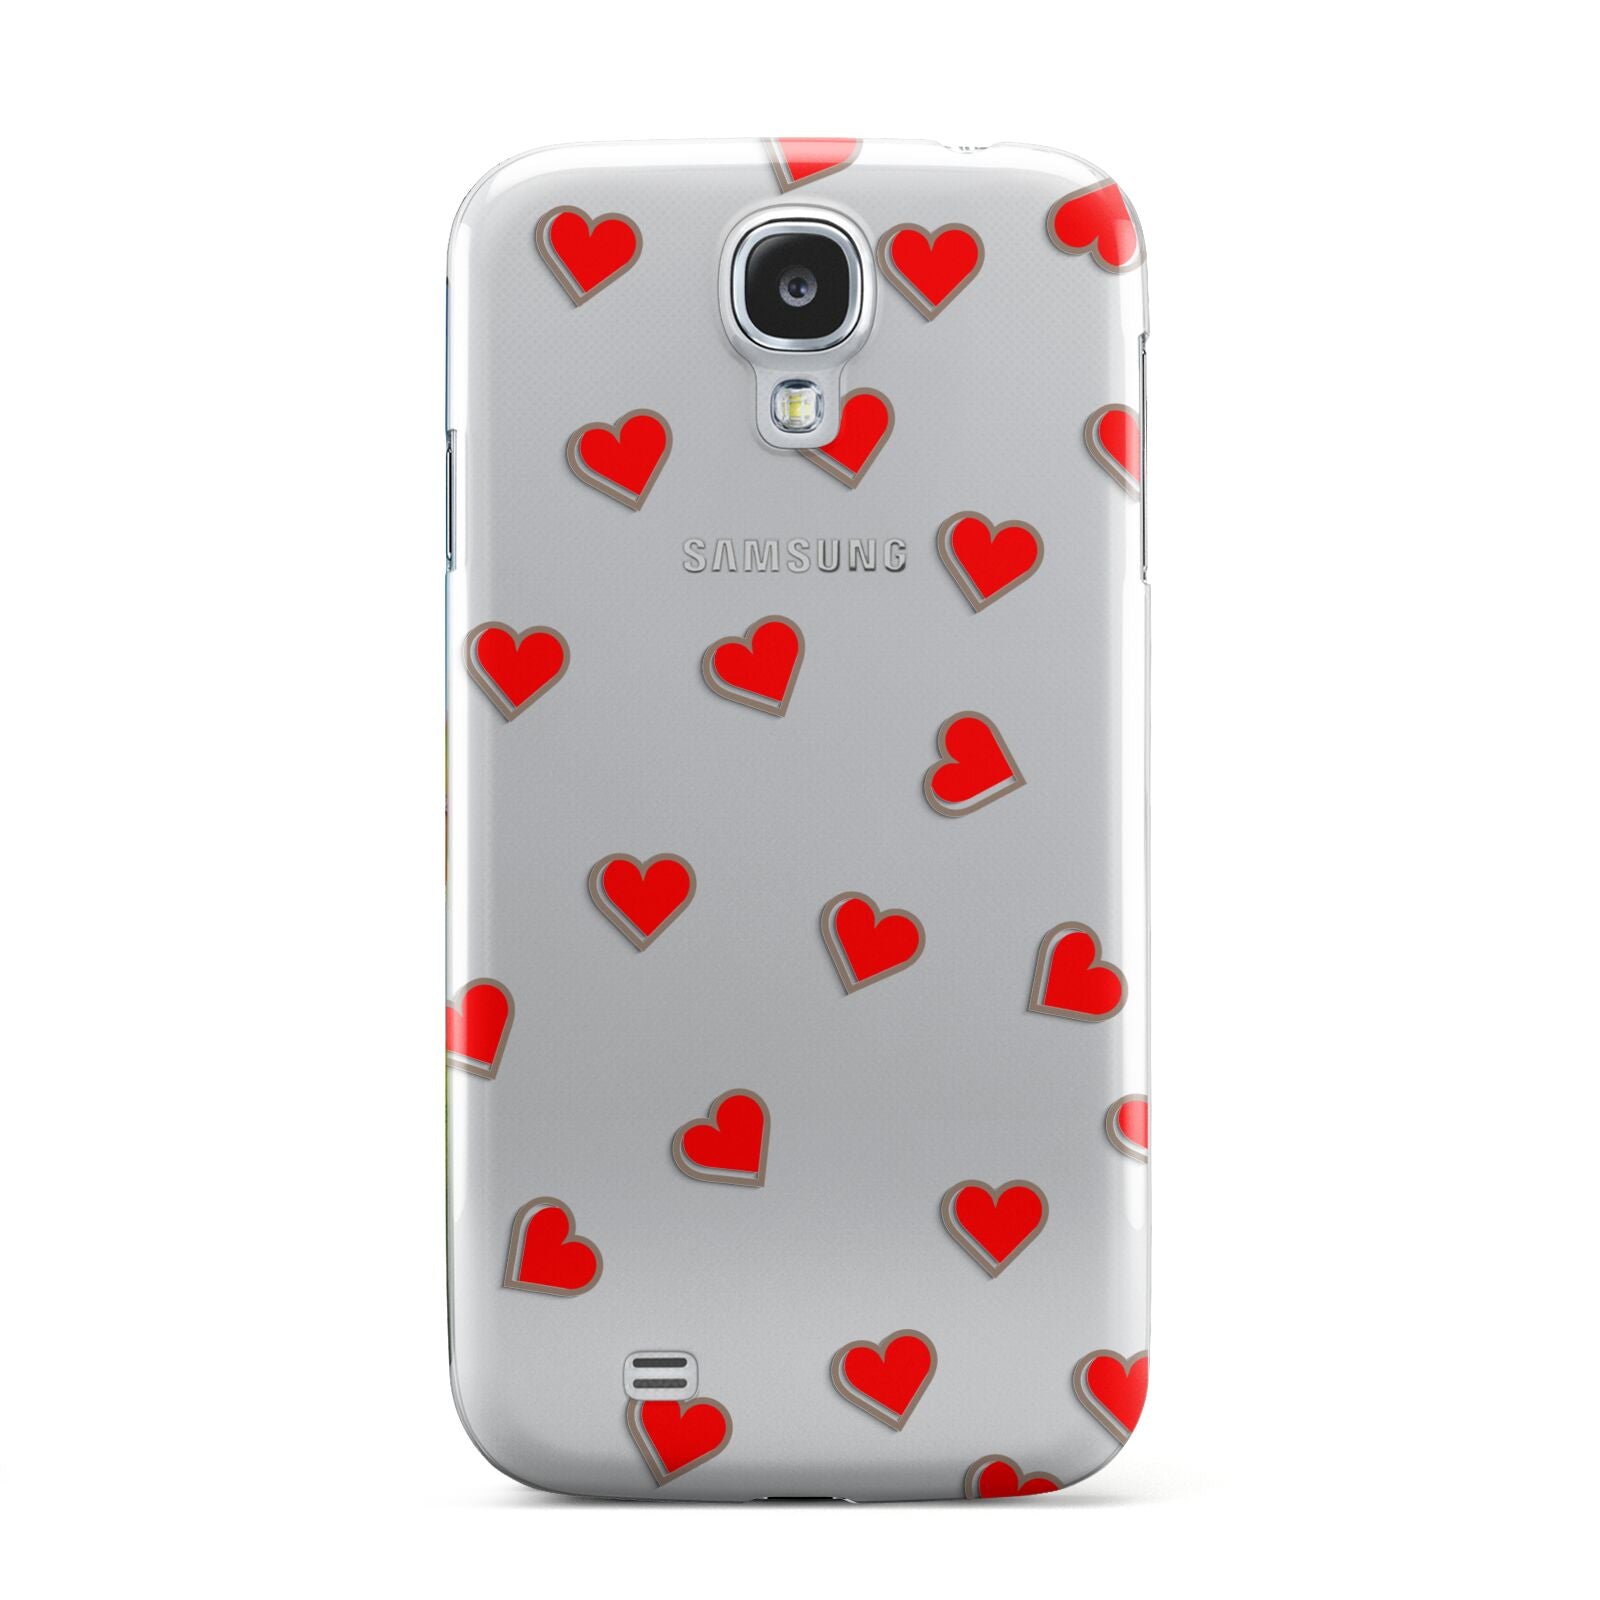 Cute Red Hearts Samsung Galaxy S4 Case